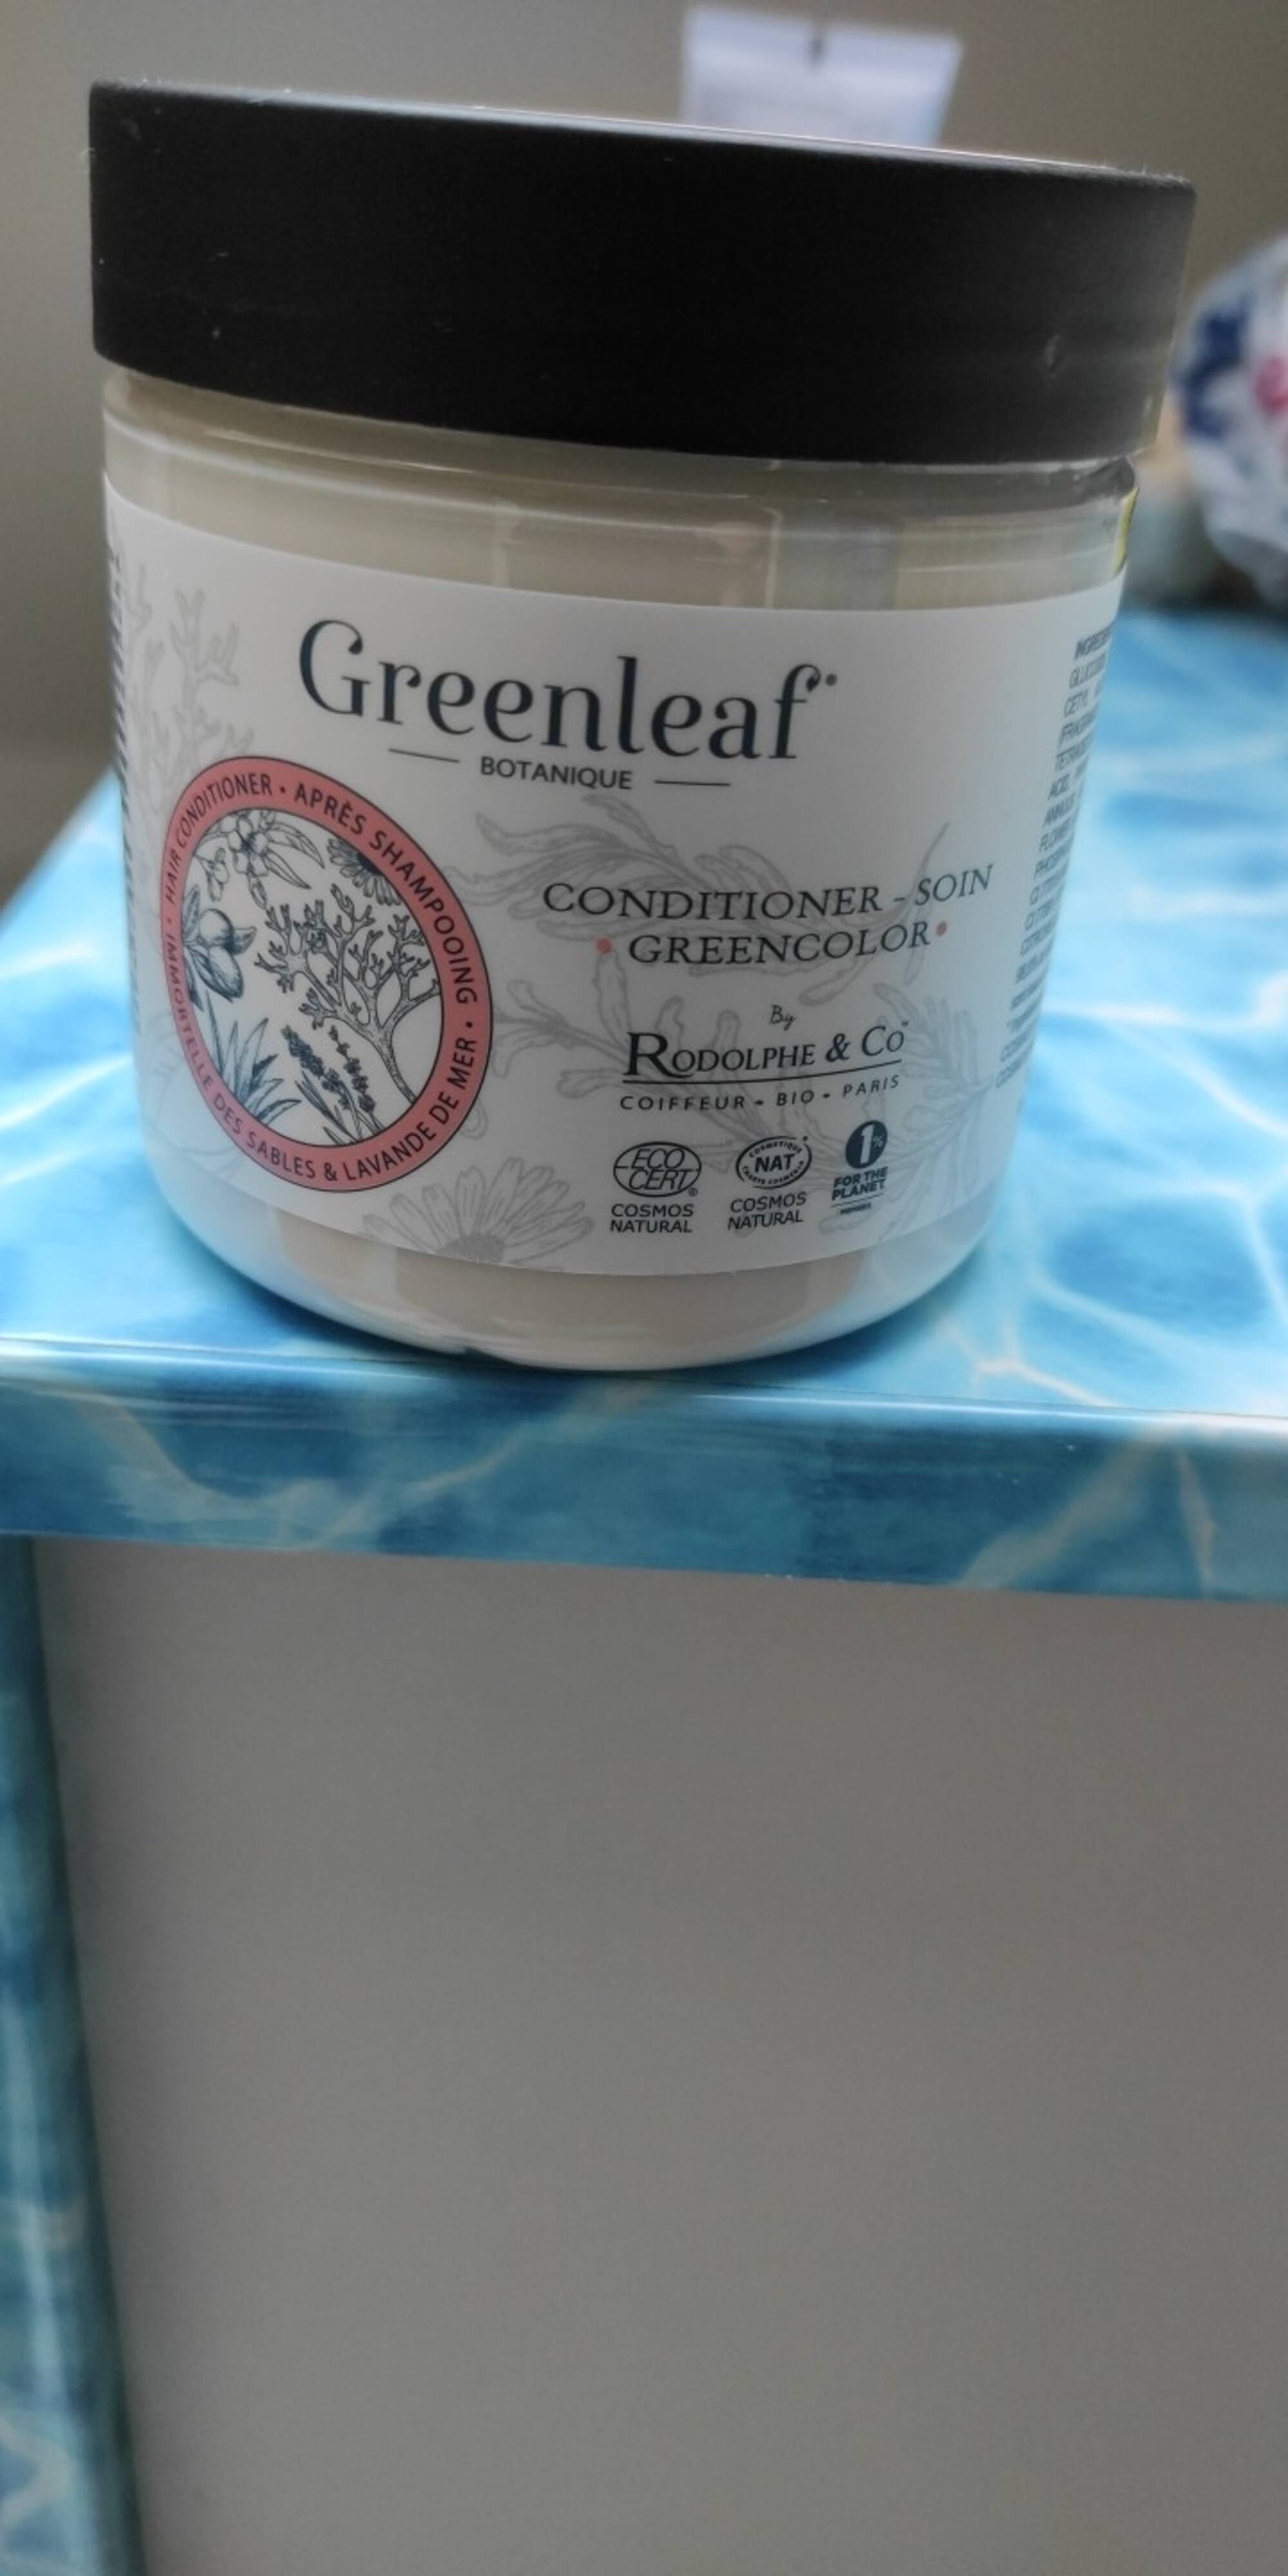 GREENLEAF - Conditioner Soin greencolor